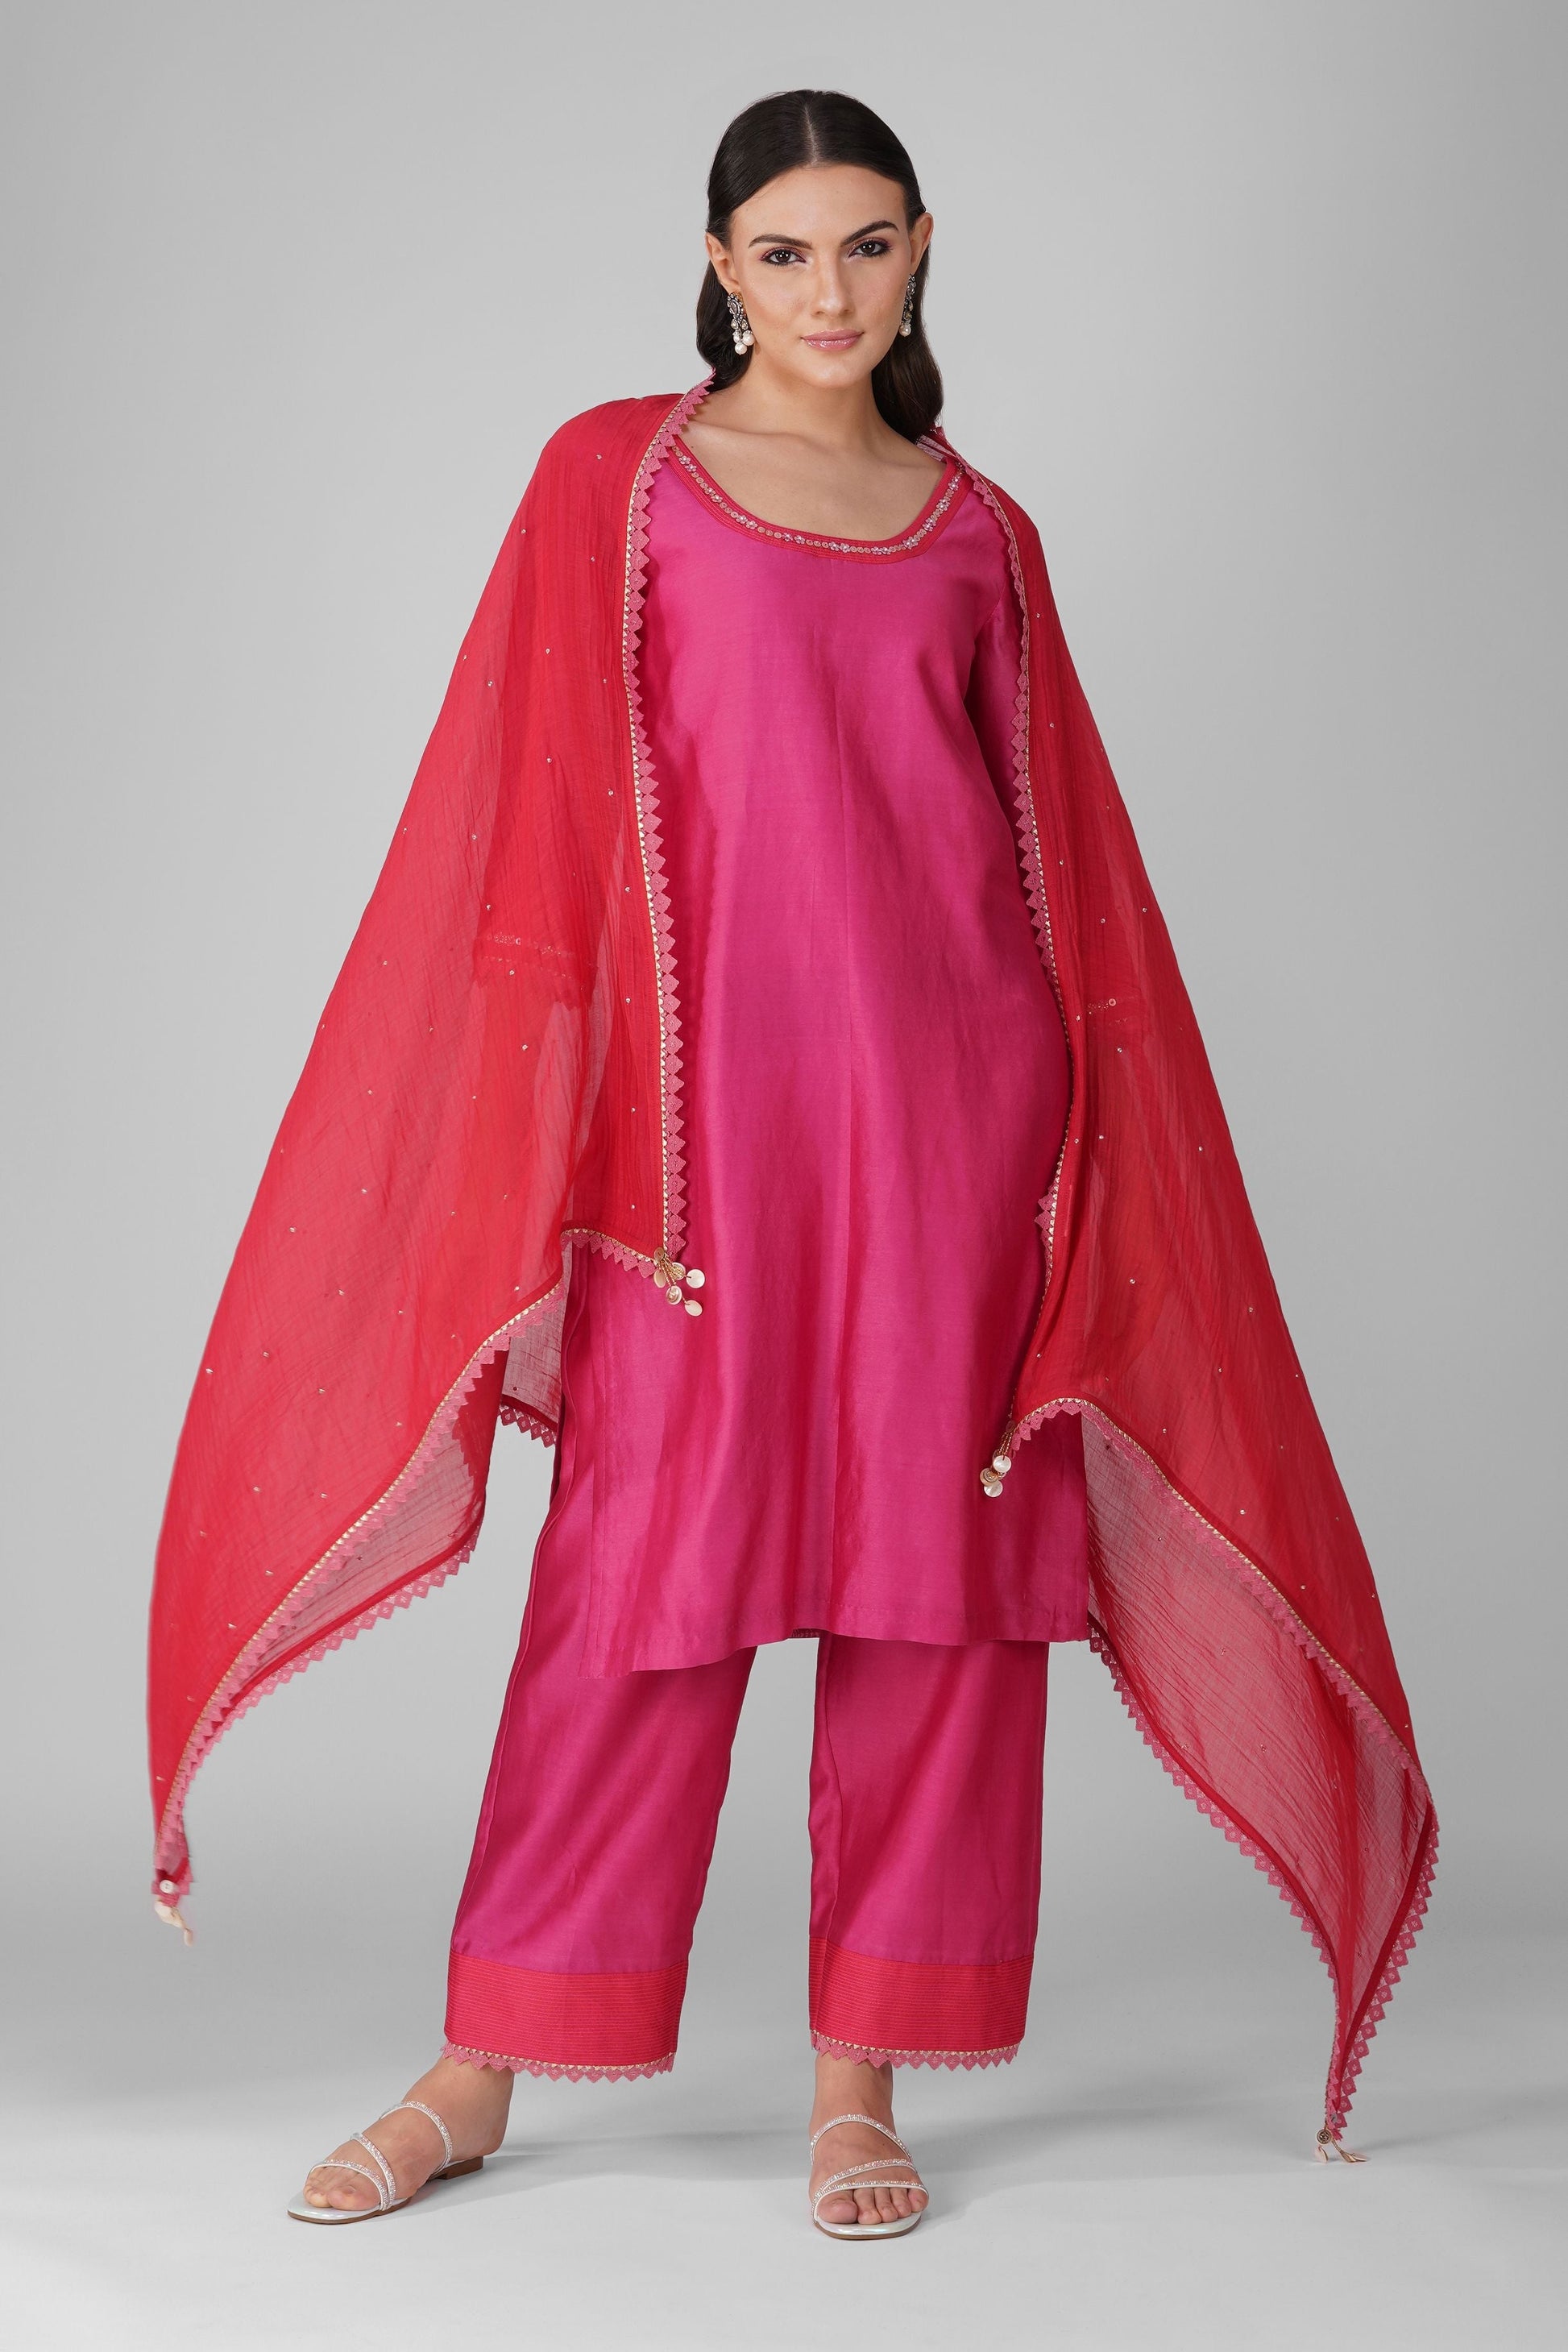 Pink Two-Tone Kurta Pant Set at Kamakhyaa by Devyani Mehrotra. This item is Chanderi, Embellished, Indian Wear, Natural, Party Wear, Pink, Regular Fit, Womenswear